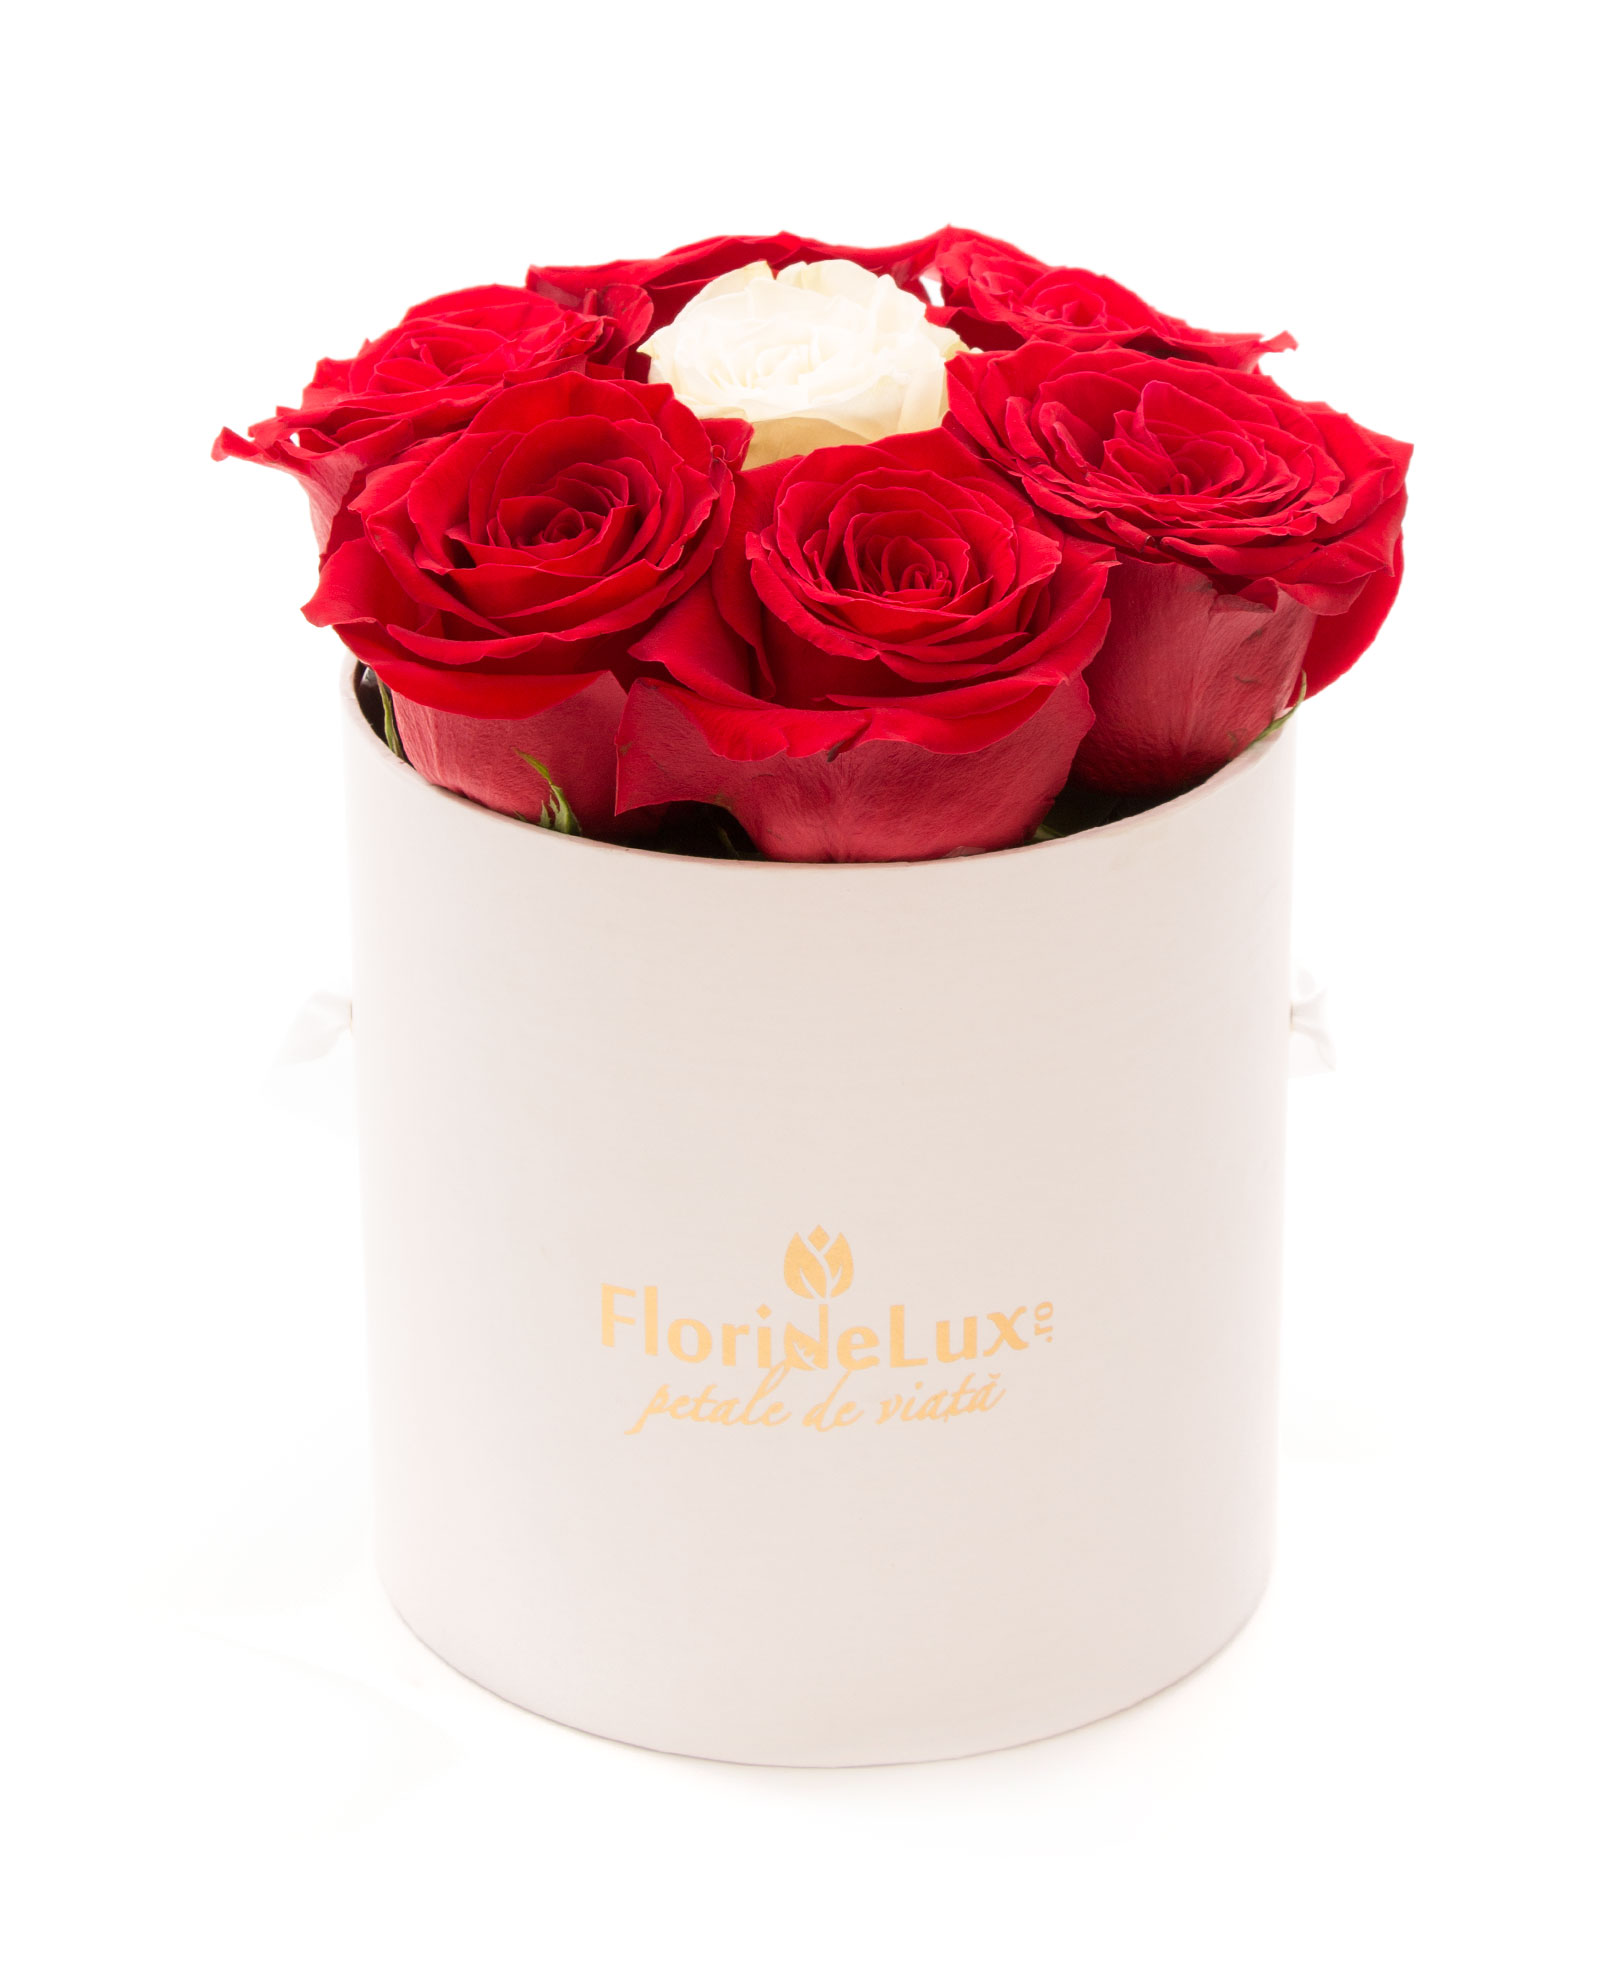 Cutie 9 trandafiri rosii si unul alb si vin Calem